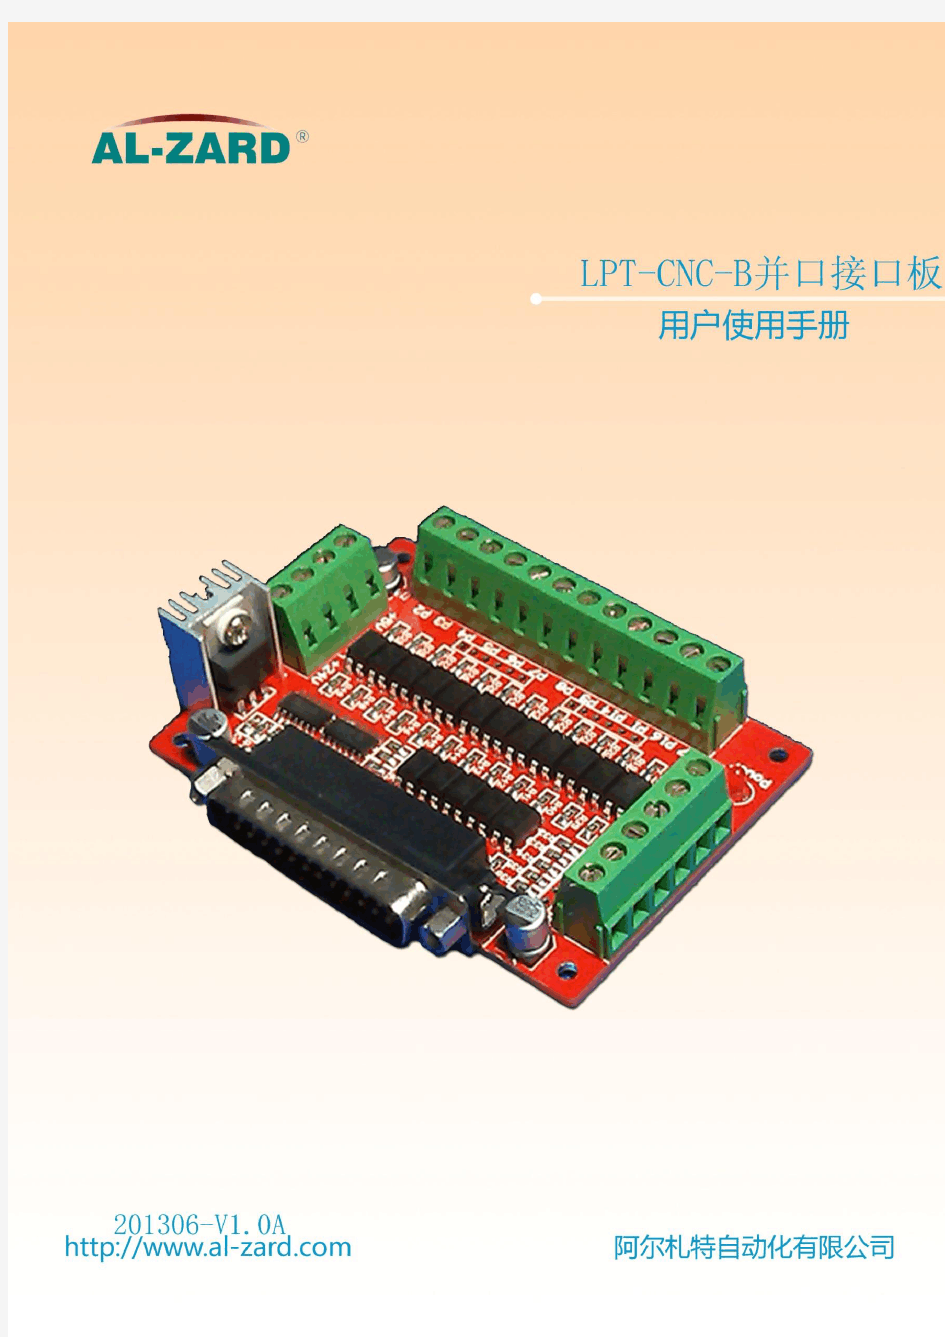 LPT-CNC-B并口接口板使用手册